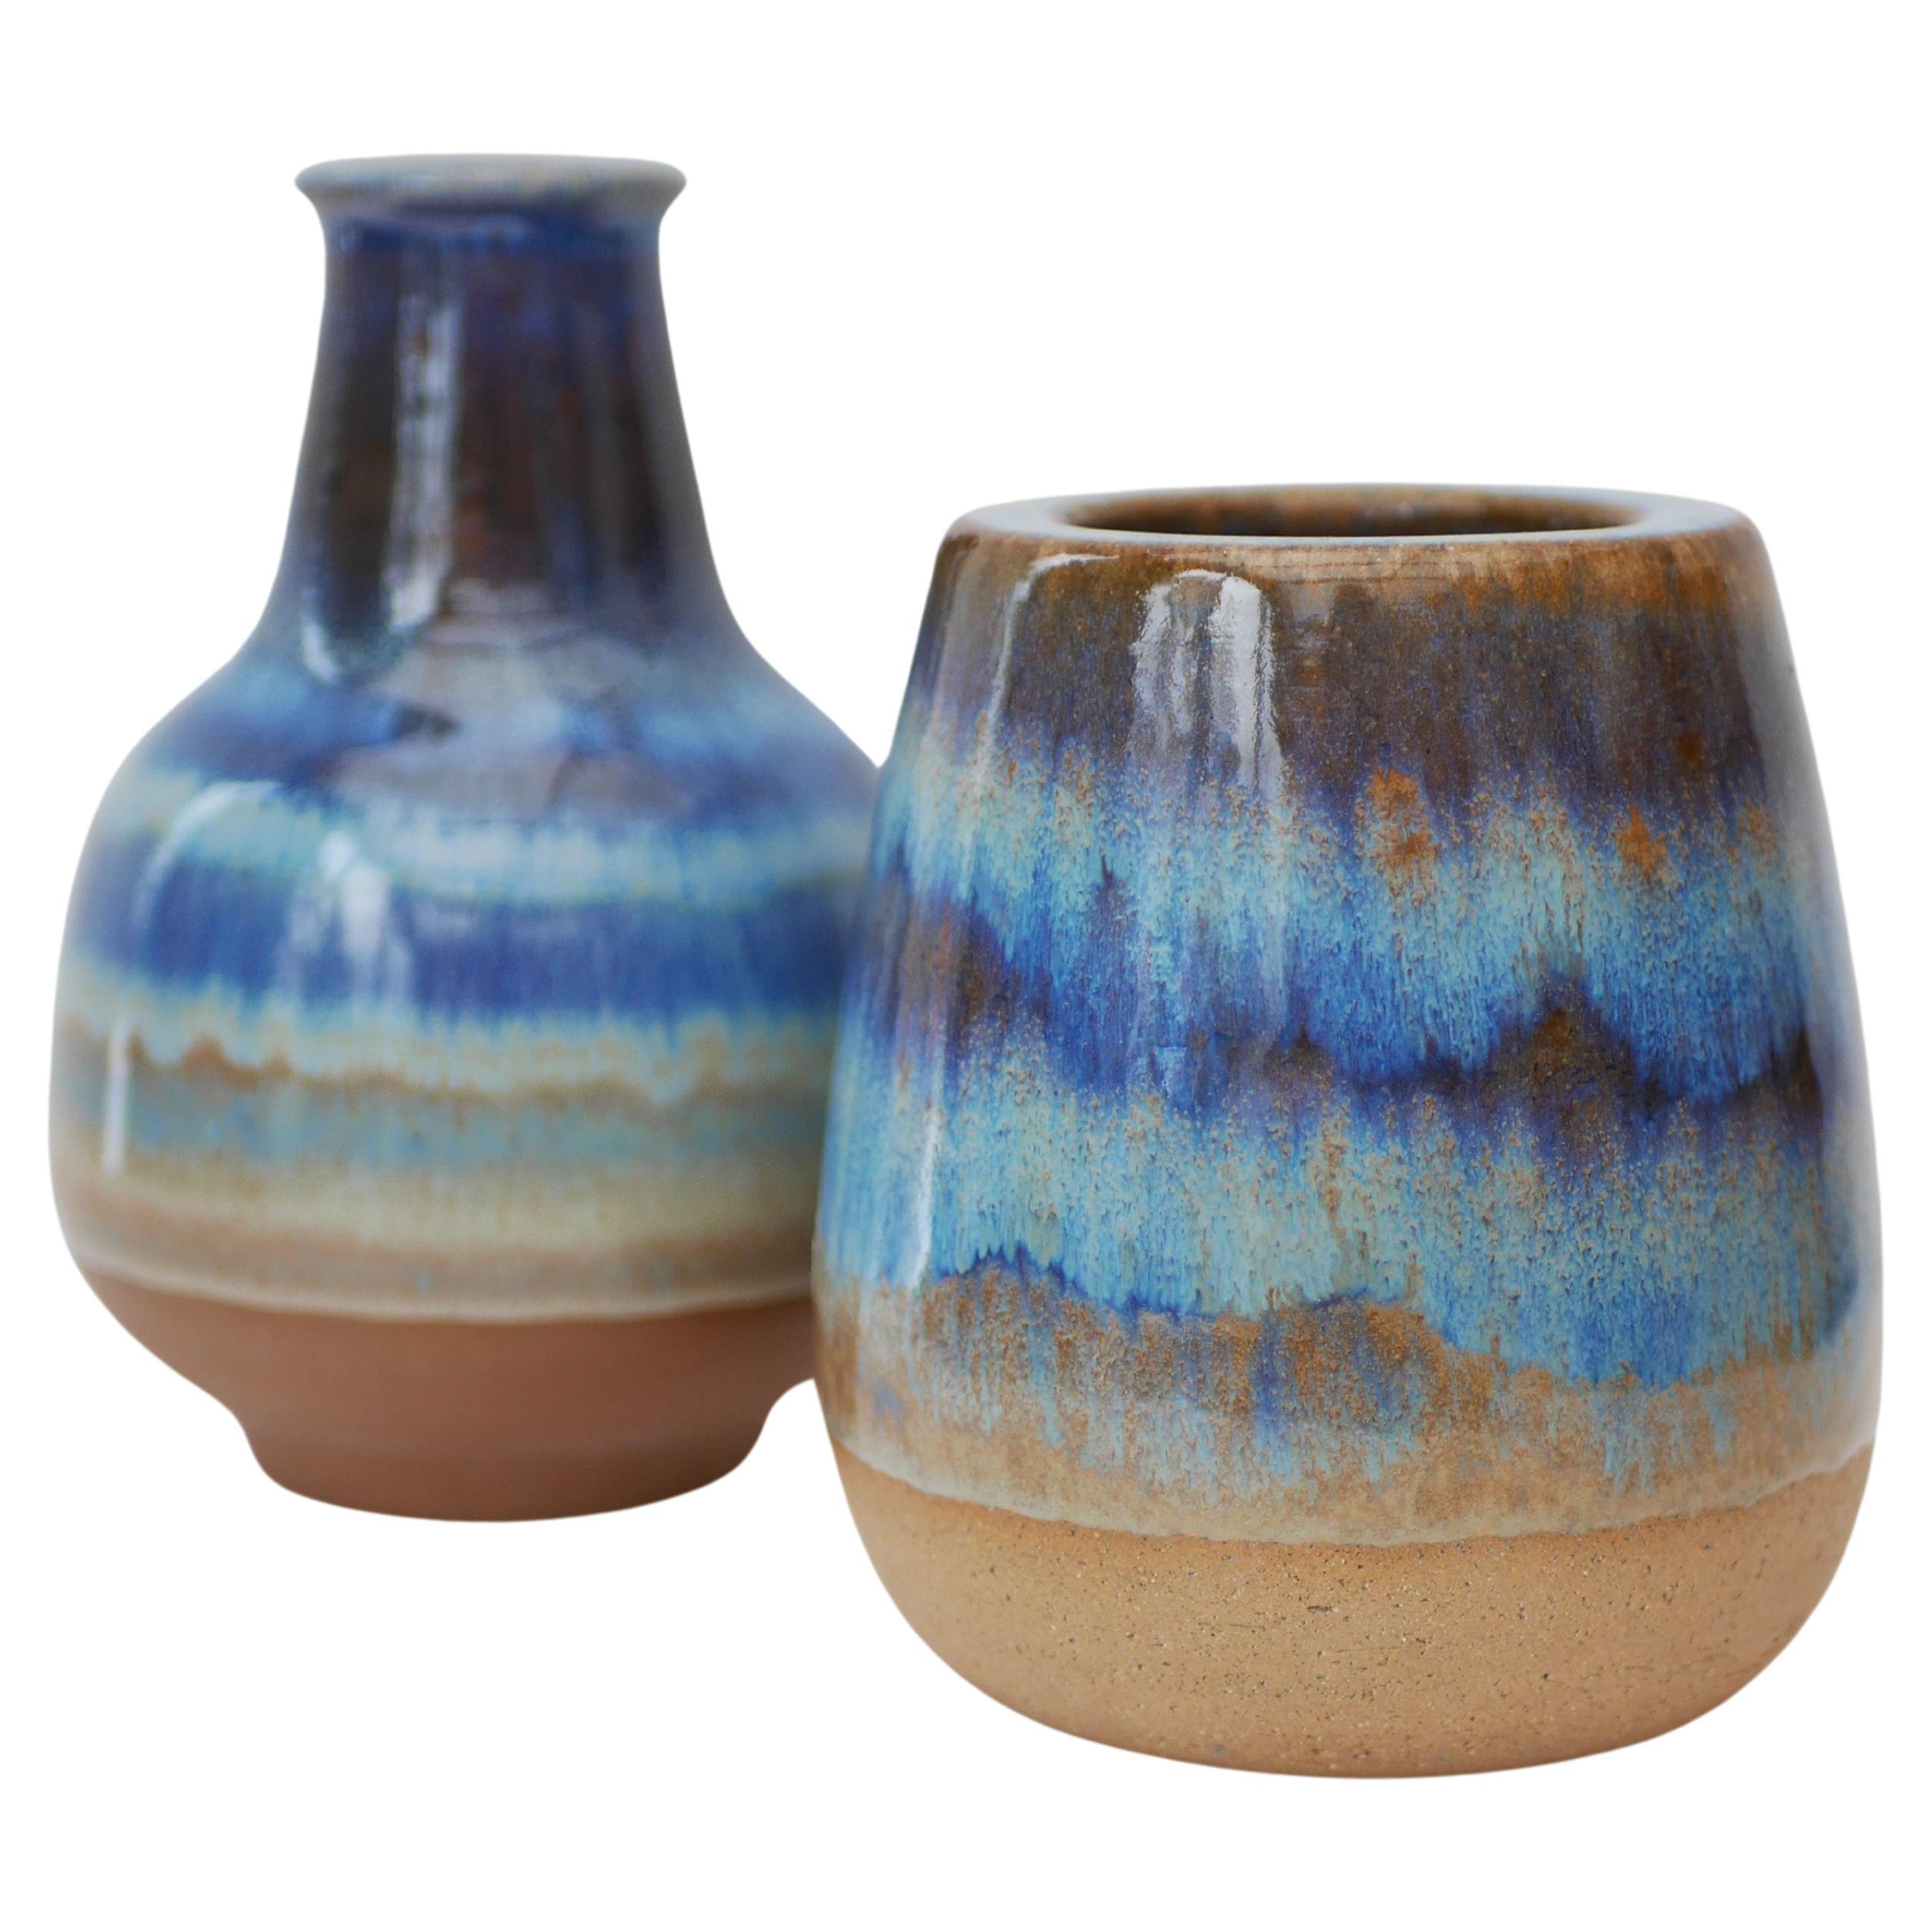 Two Mid-century blue vases by Michael Andersen, Bornholm, Denmark.